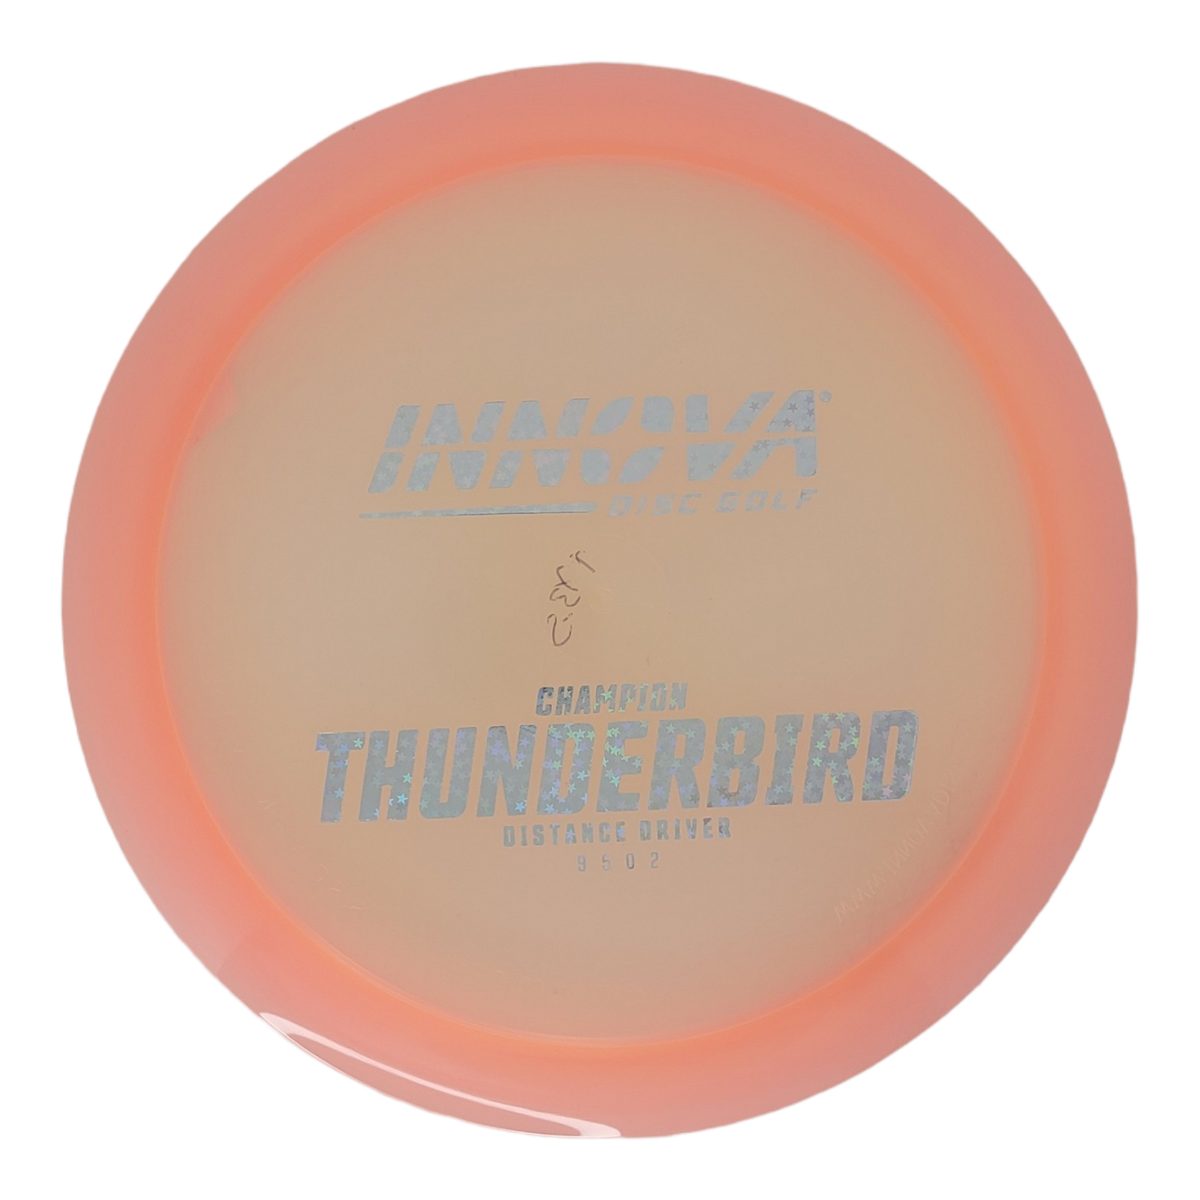 Innova Champion Thunderbird